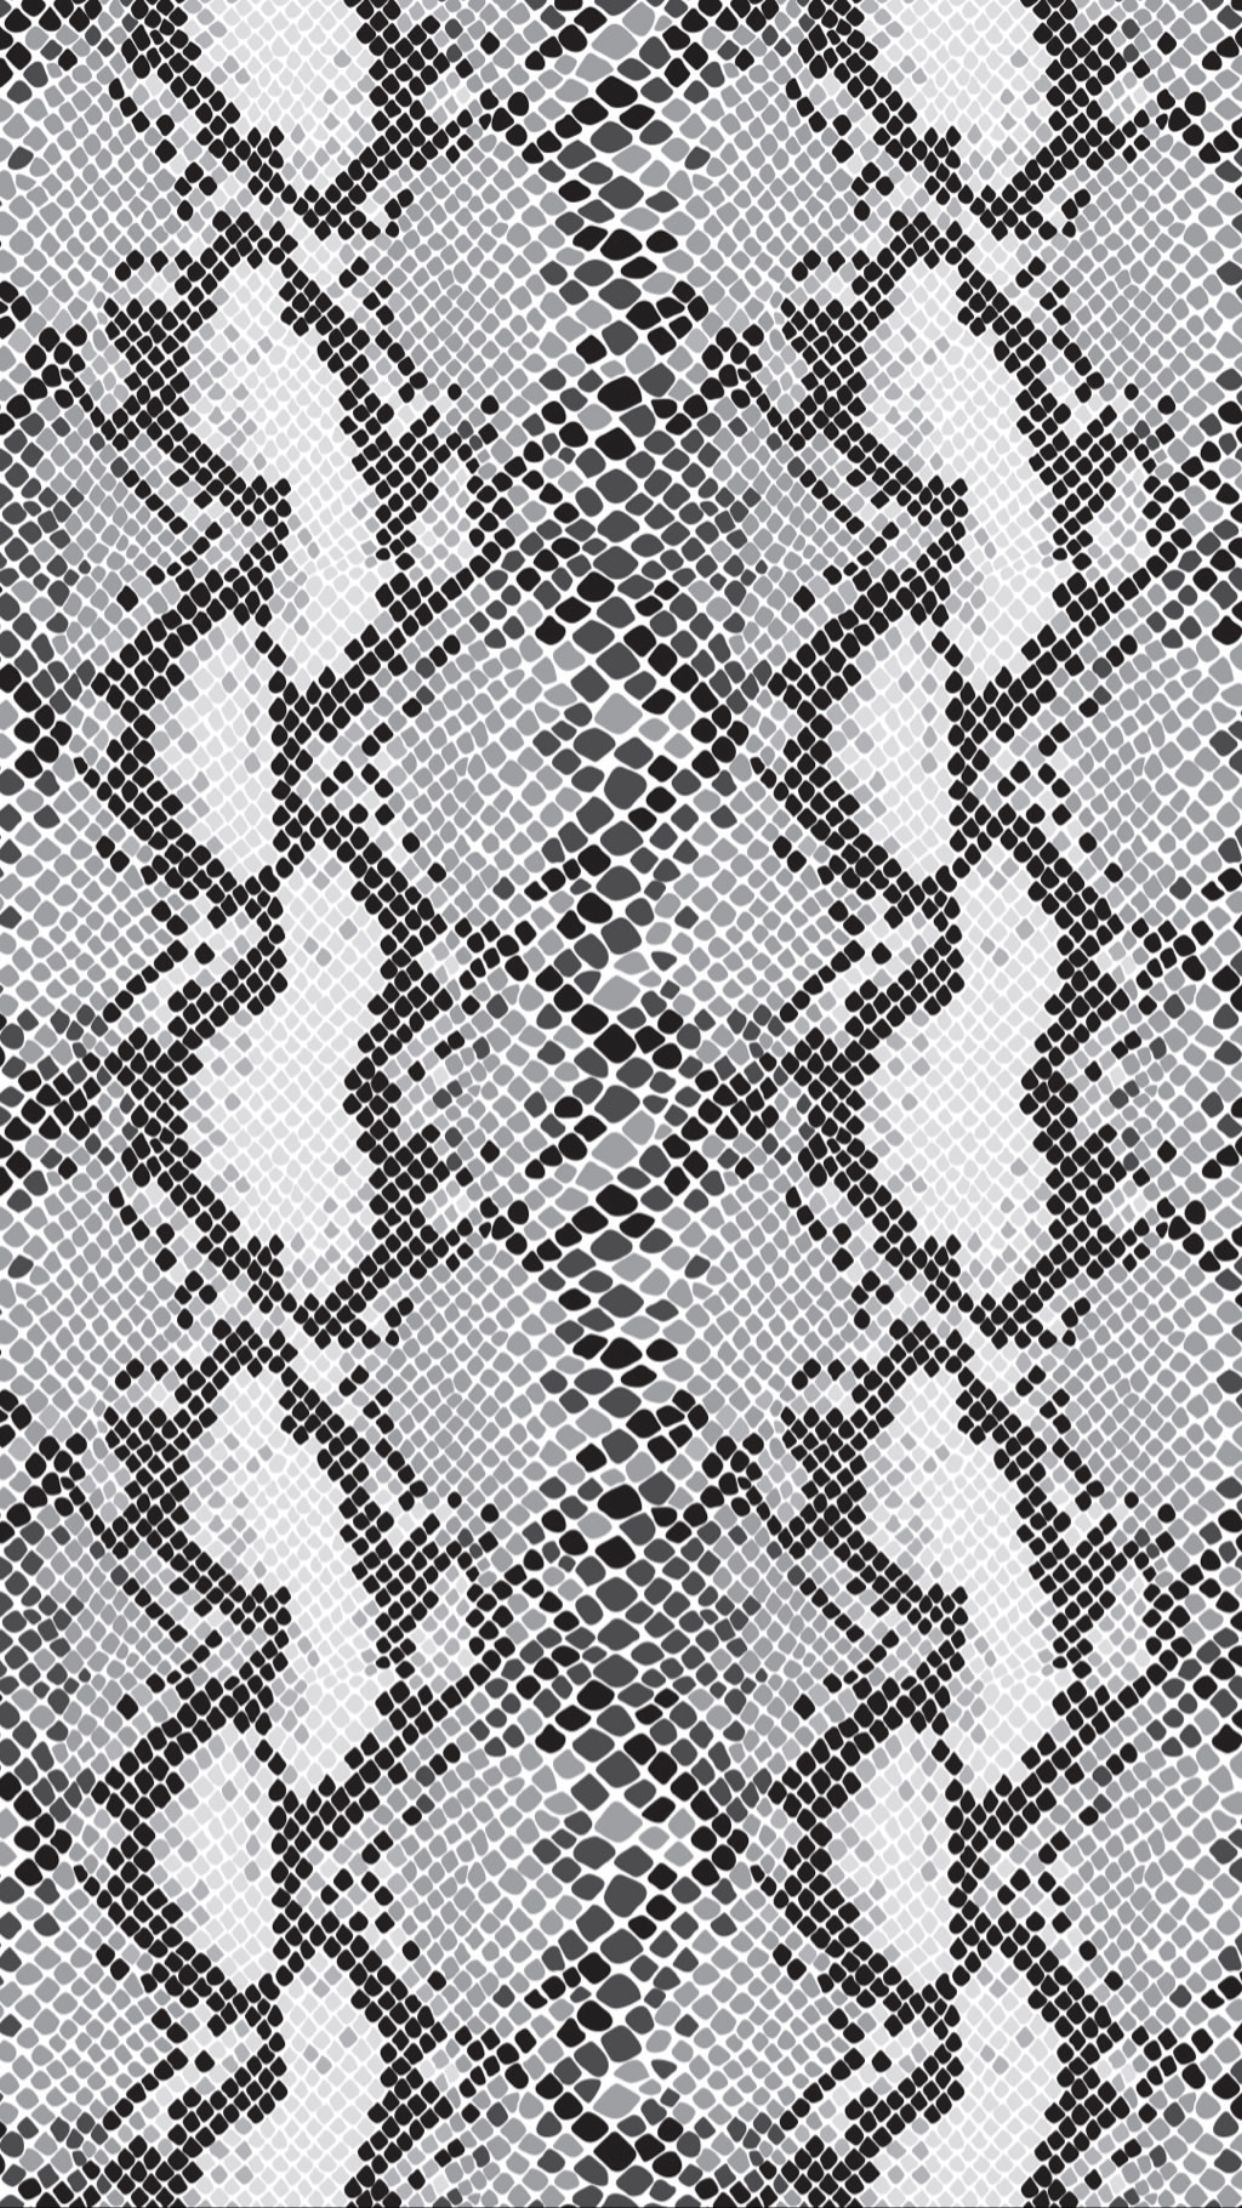 snakeskin wallpaper,pattern,textile,design,pattern,monochrome